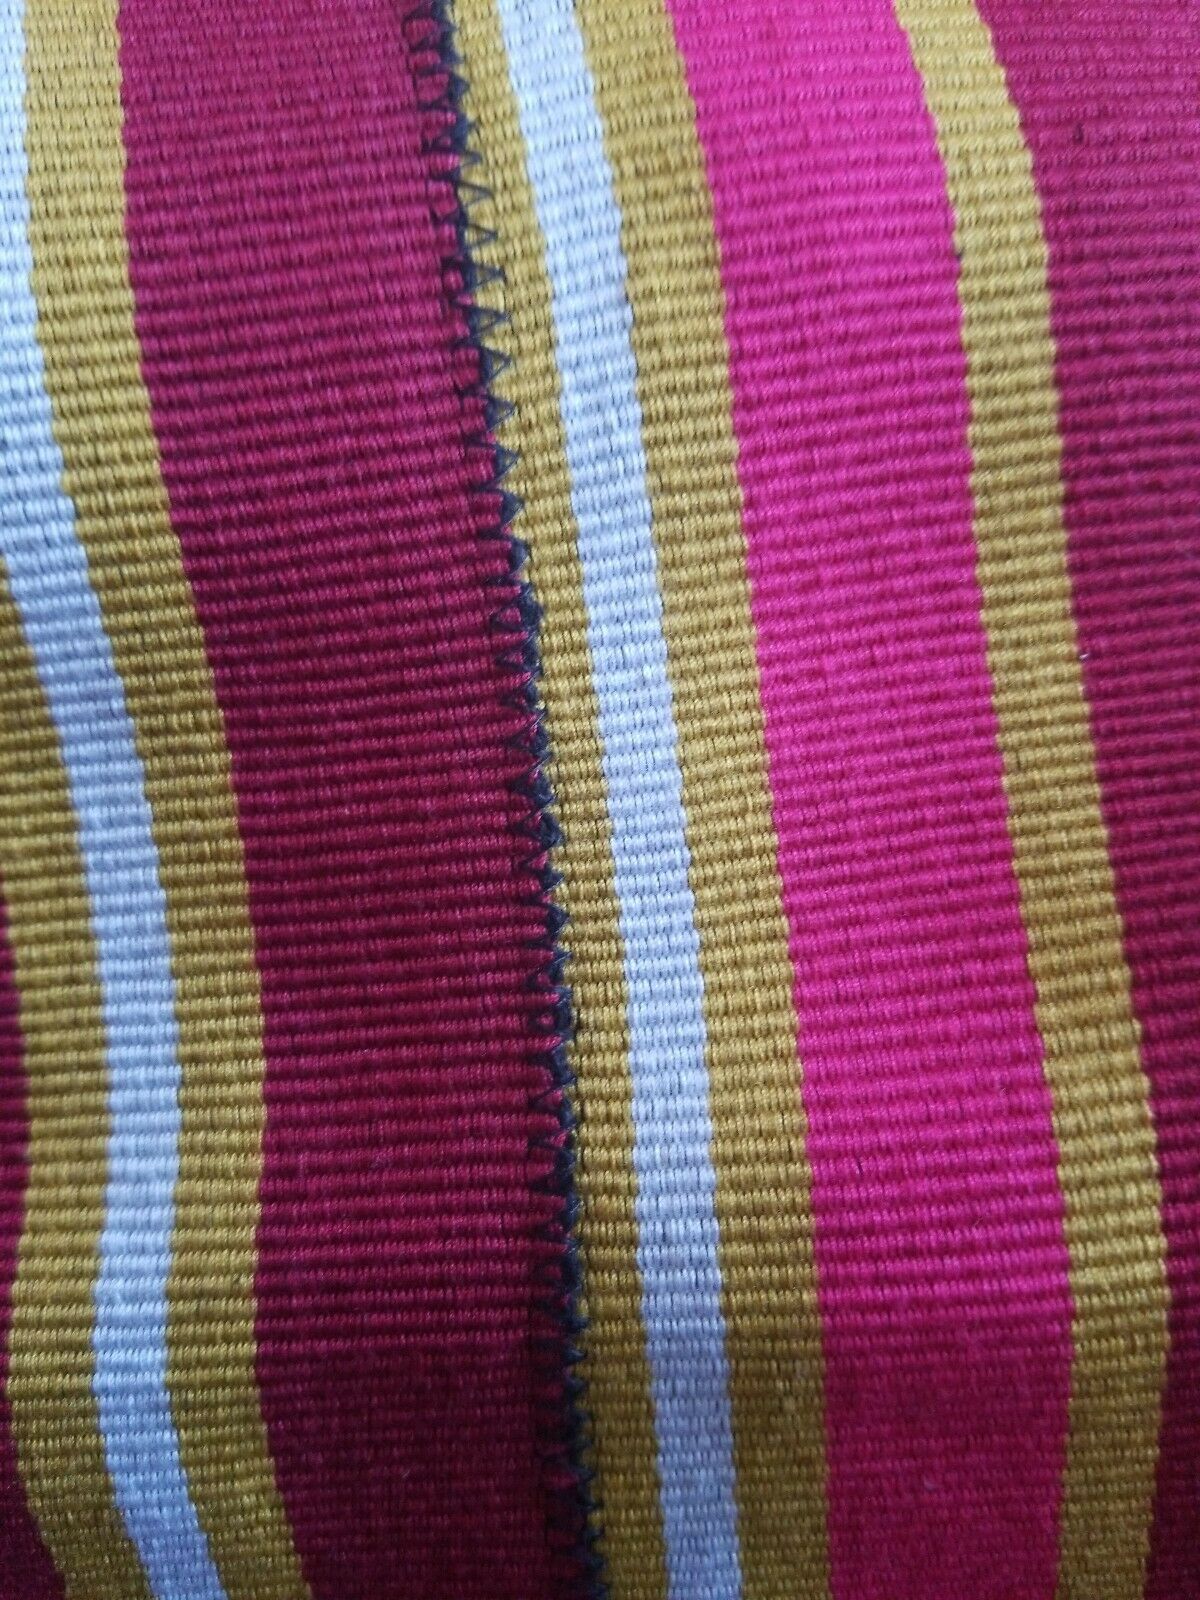 FasoDaFani Fabric From Boukina burgundy,mustard  multi colored stripes52"×77"